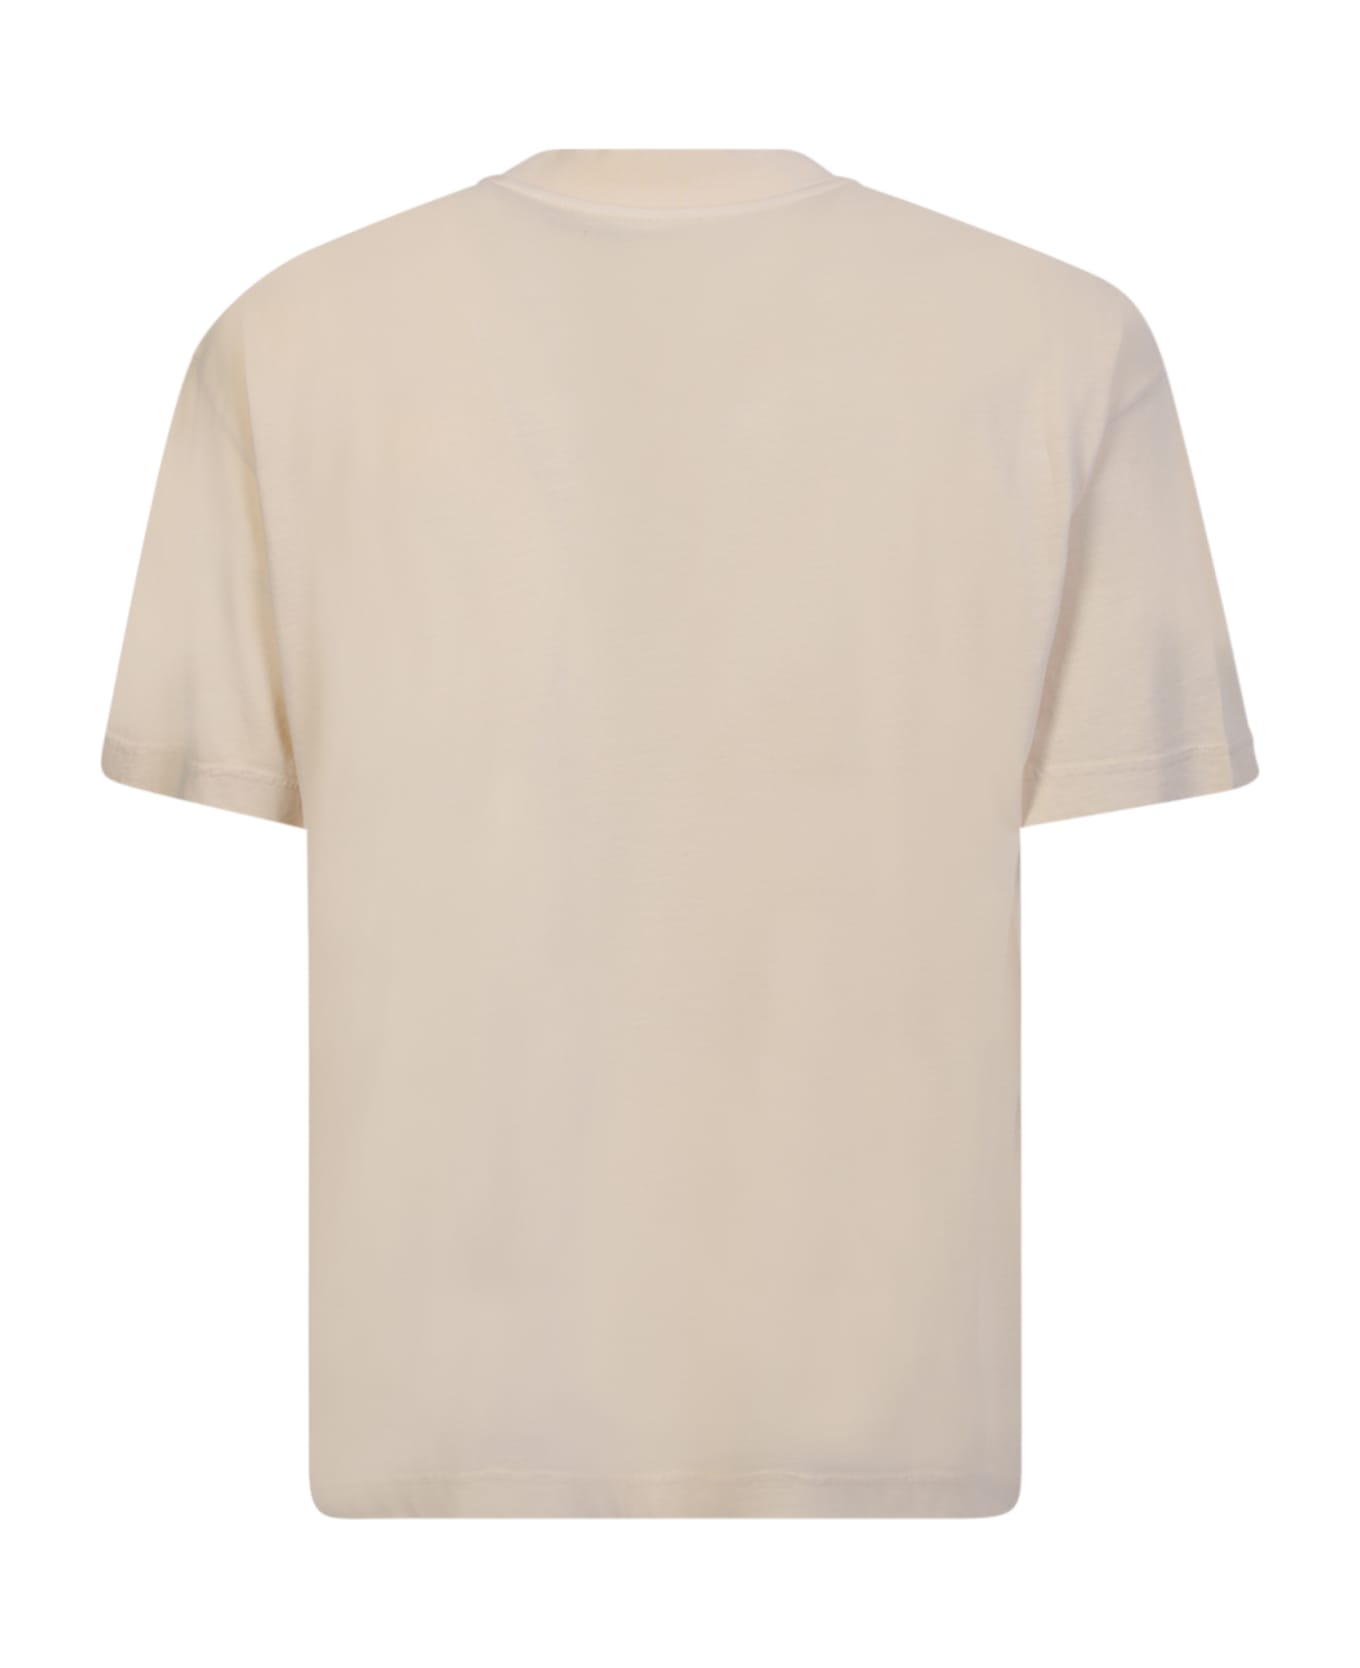 Bonsai Regular Beige Logo T-shirt - White